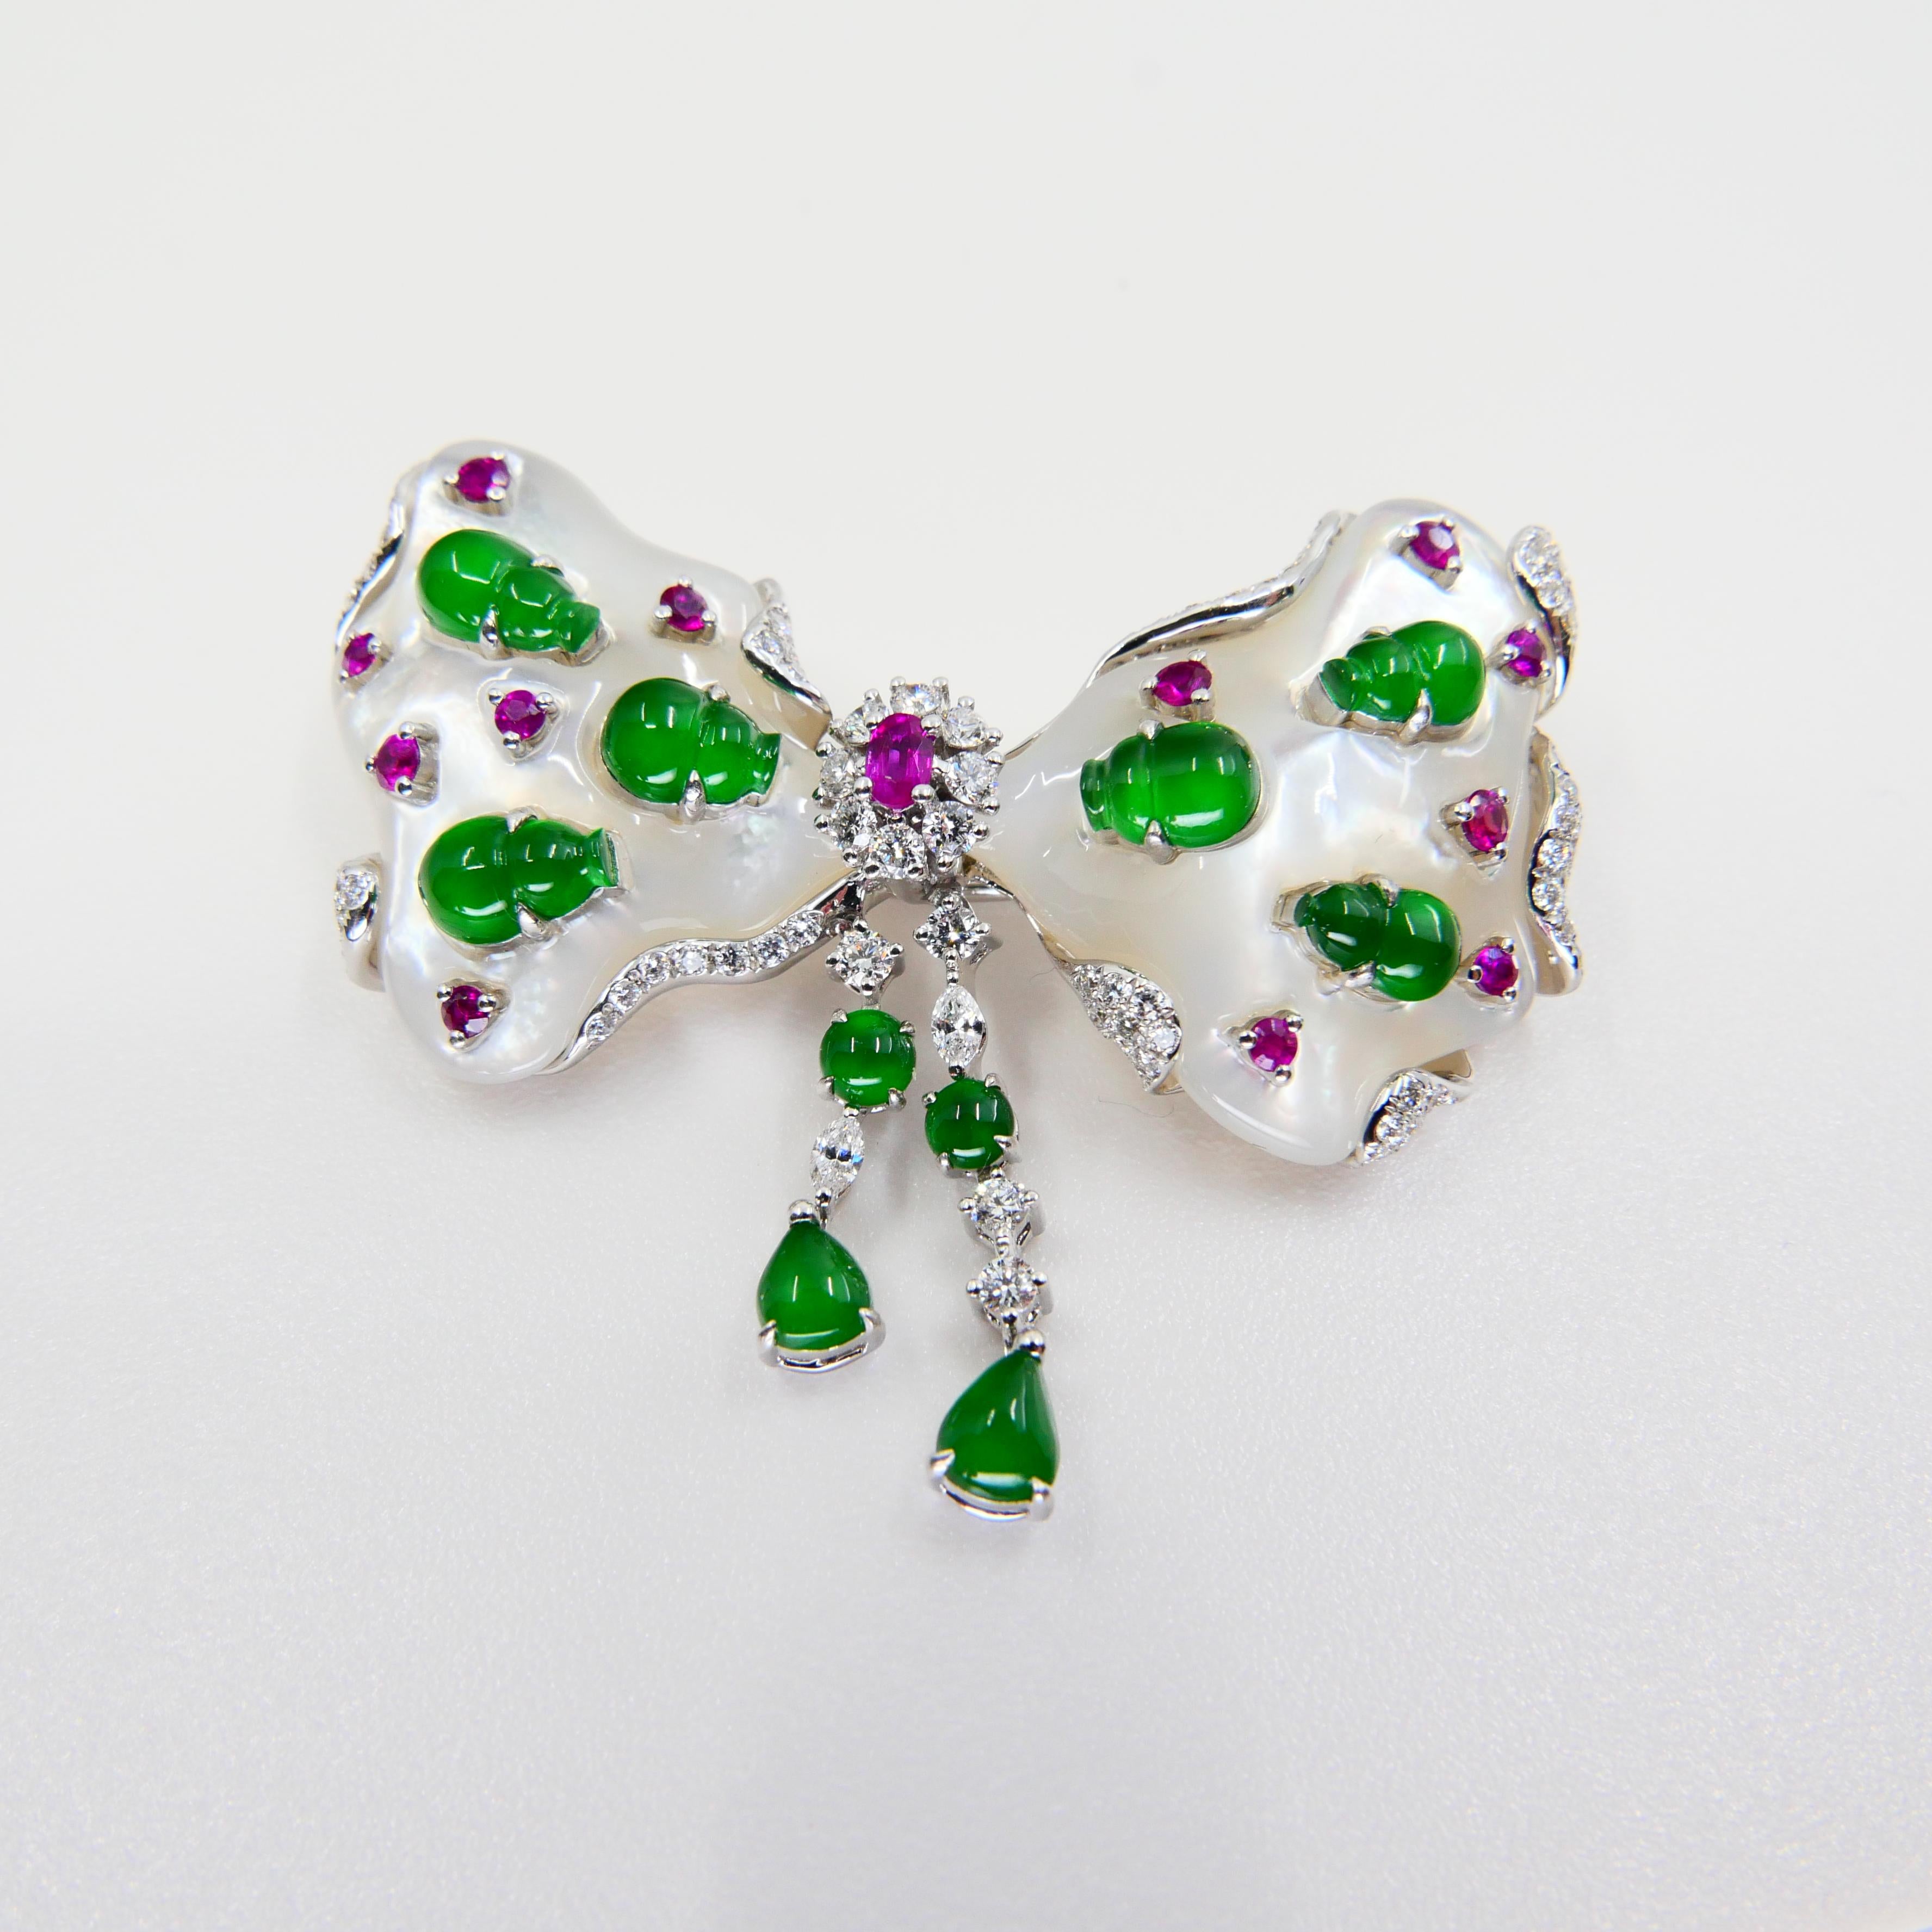 Certified Imperial Green Jadeite Jade Bow, Ruby, Diamond Pendant & Brooch, Glows 7